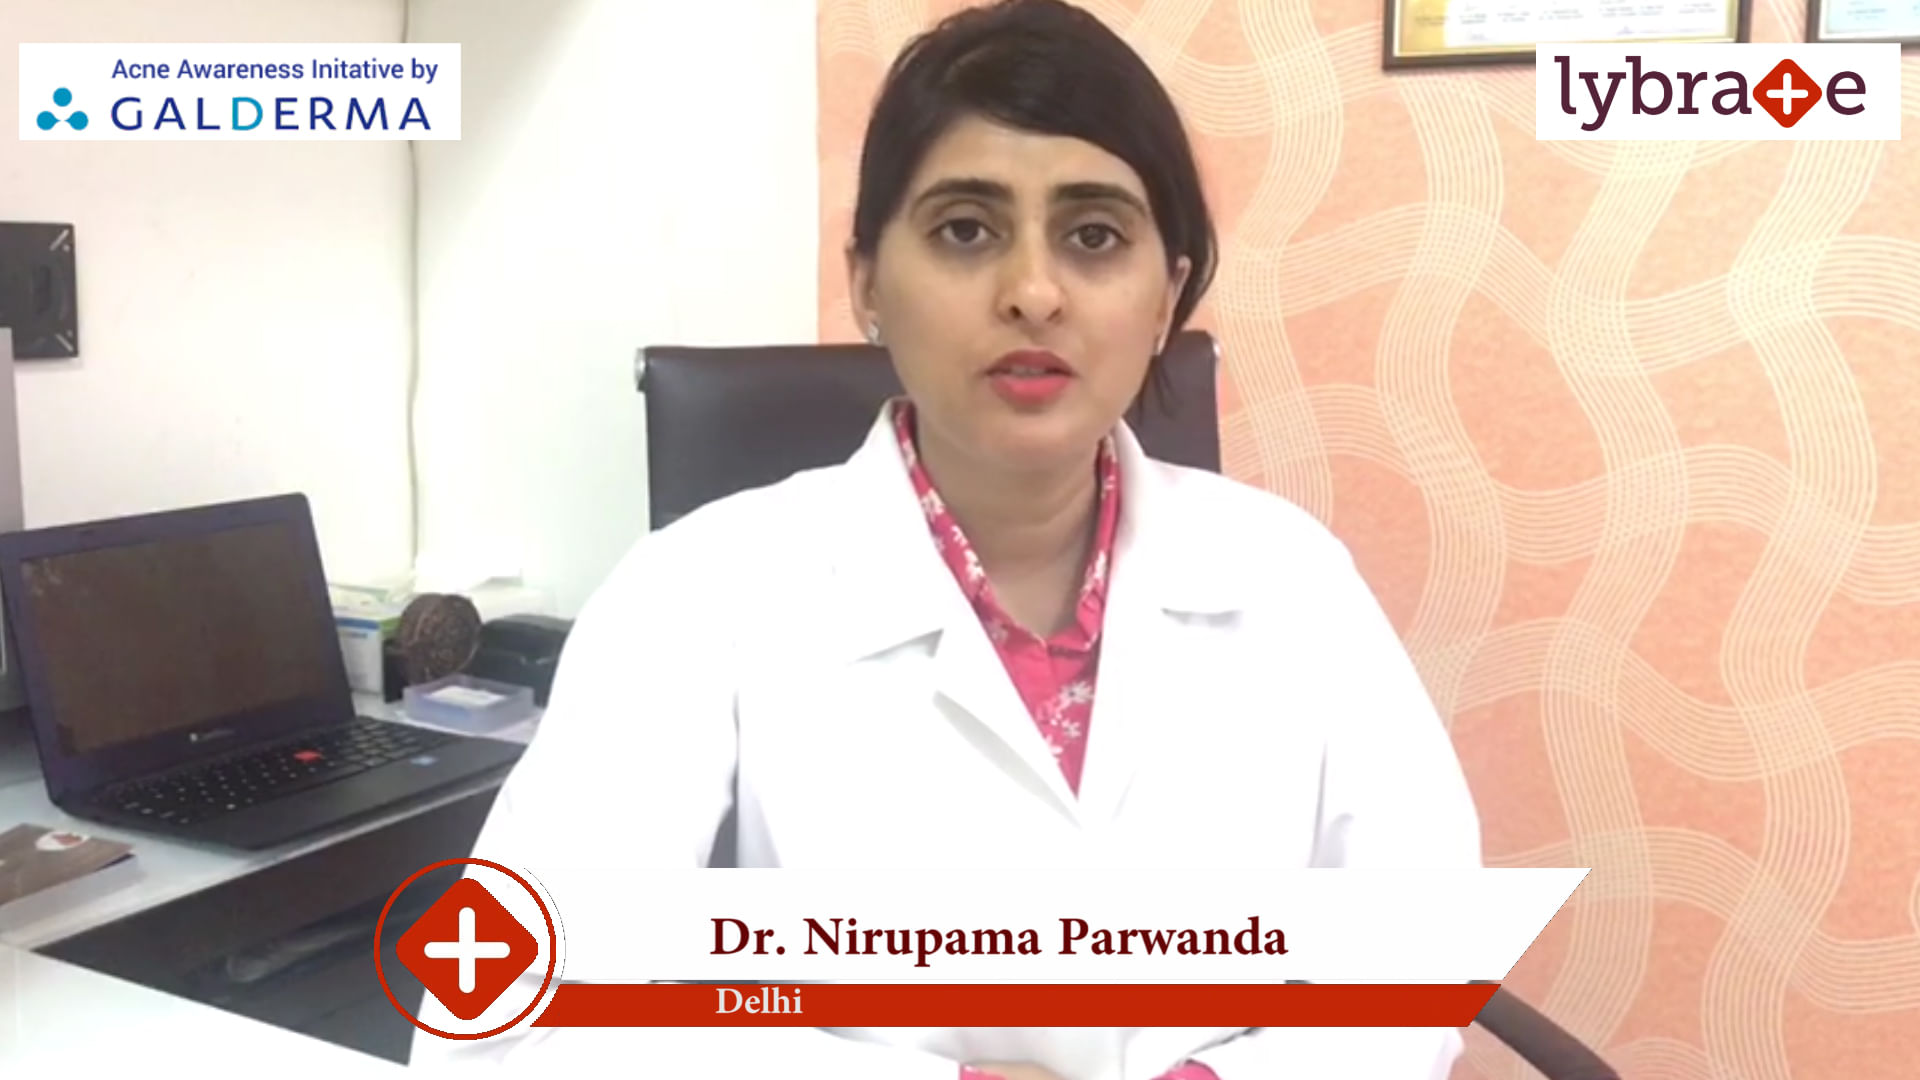 Lybrate | Dr. Nirupama Parwanda speaks on IMPORTANCE OF TREATING ACNE EARLY